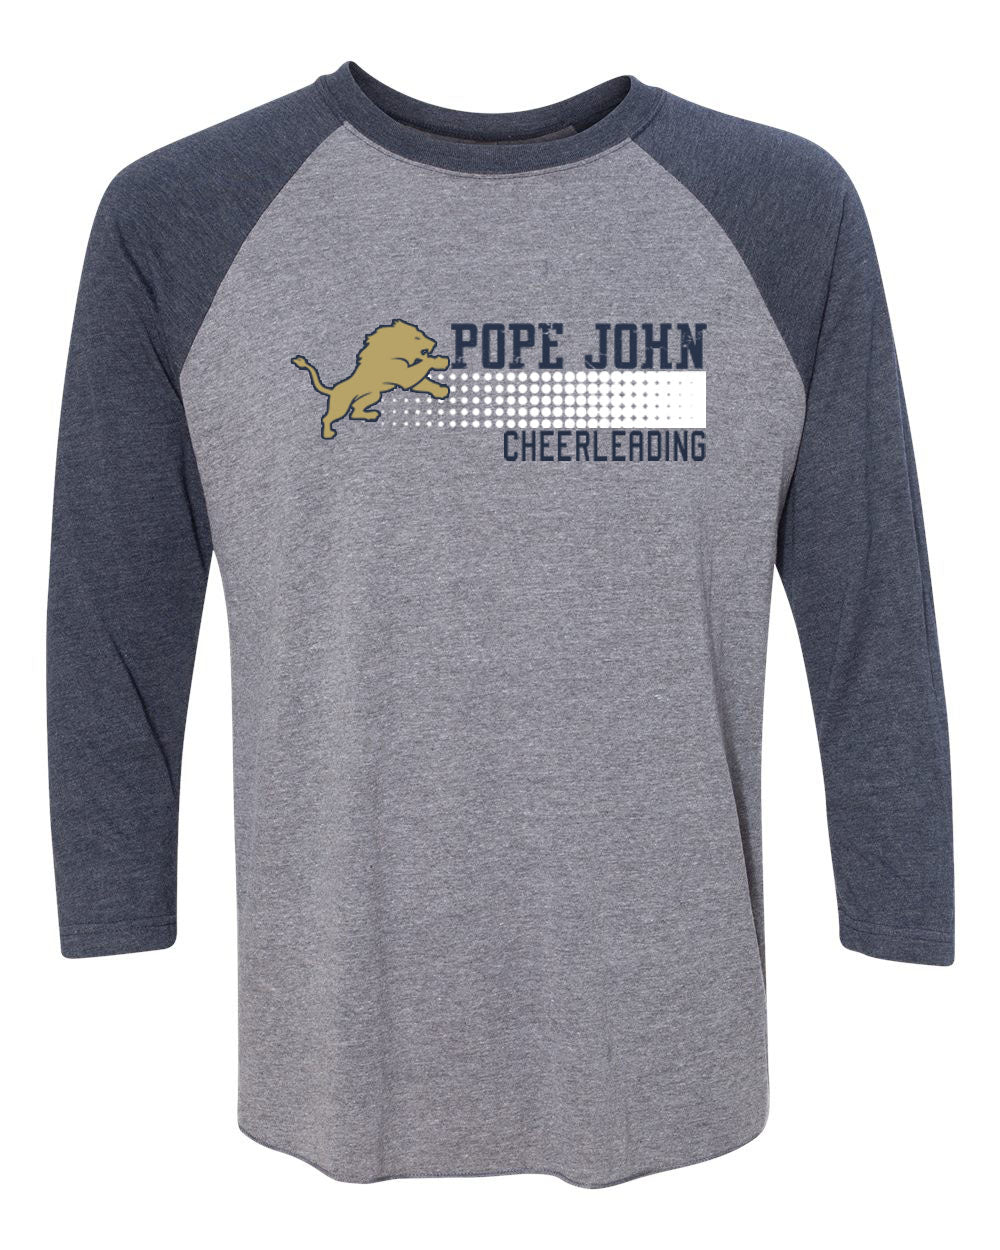 Pope John Cheer Design 4 raglan shirt